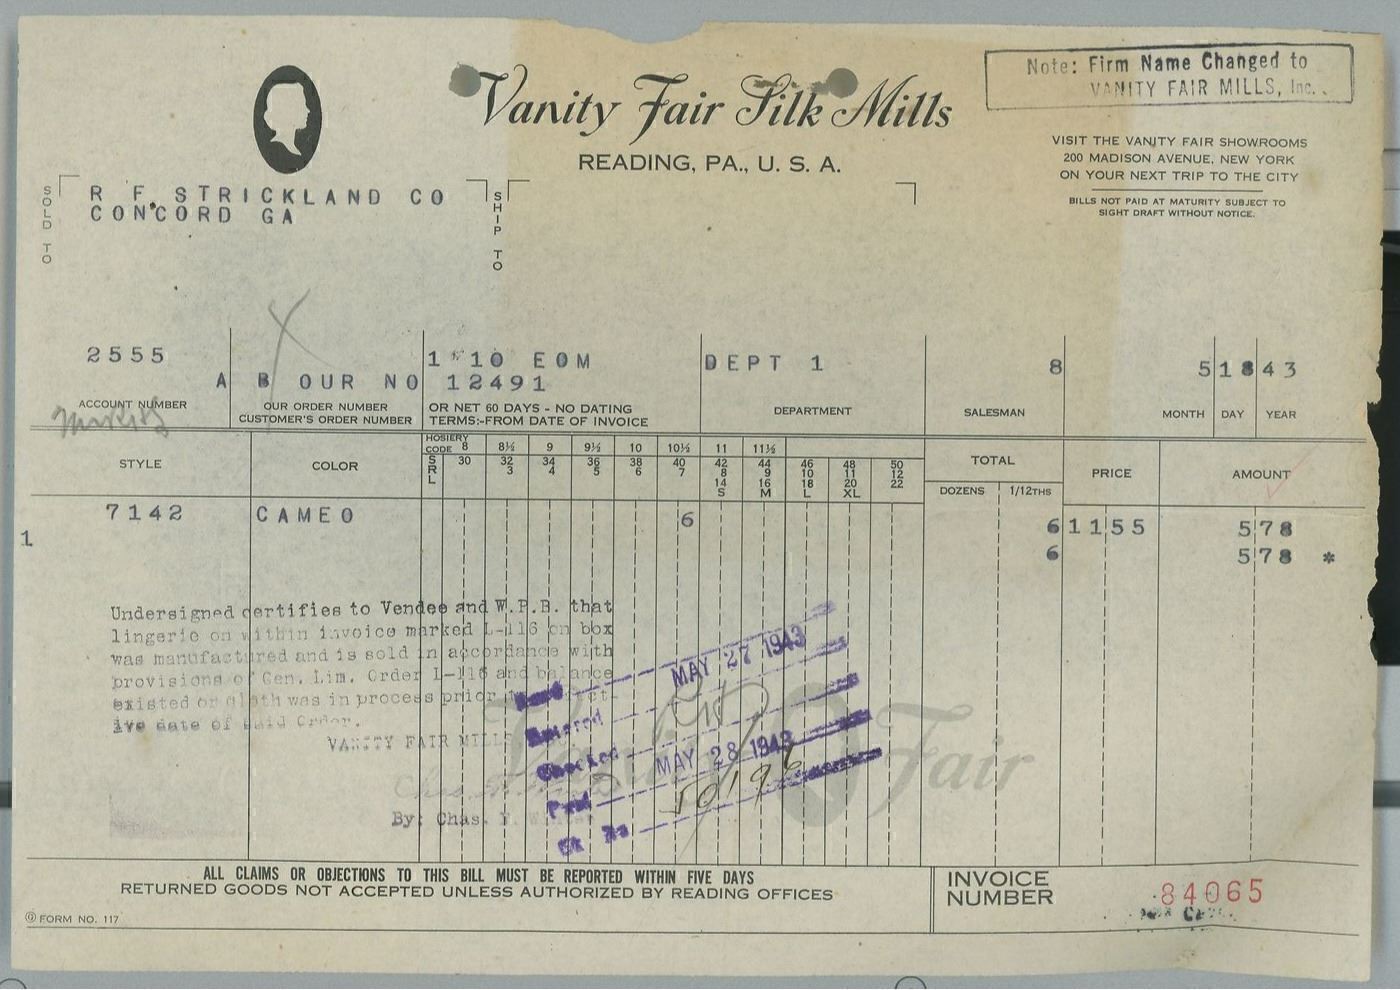 1943 Vanity Fair Silk Mills Reading PA Invoice R.F. Strickland Co. Concord GA158